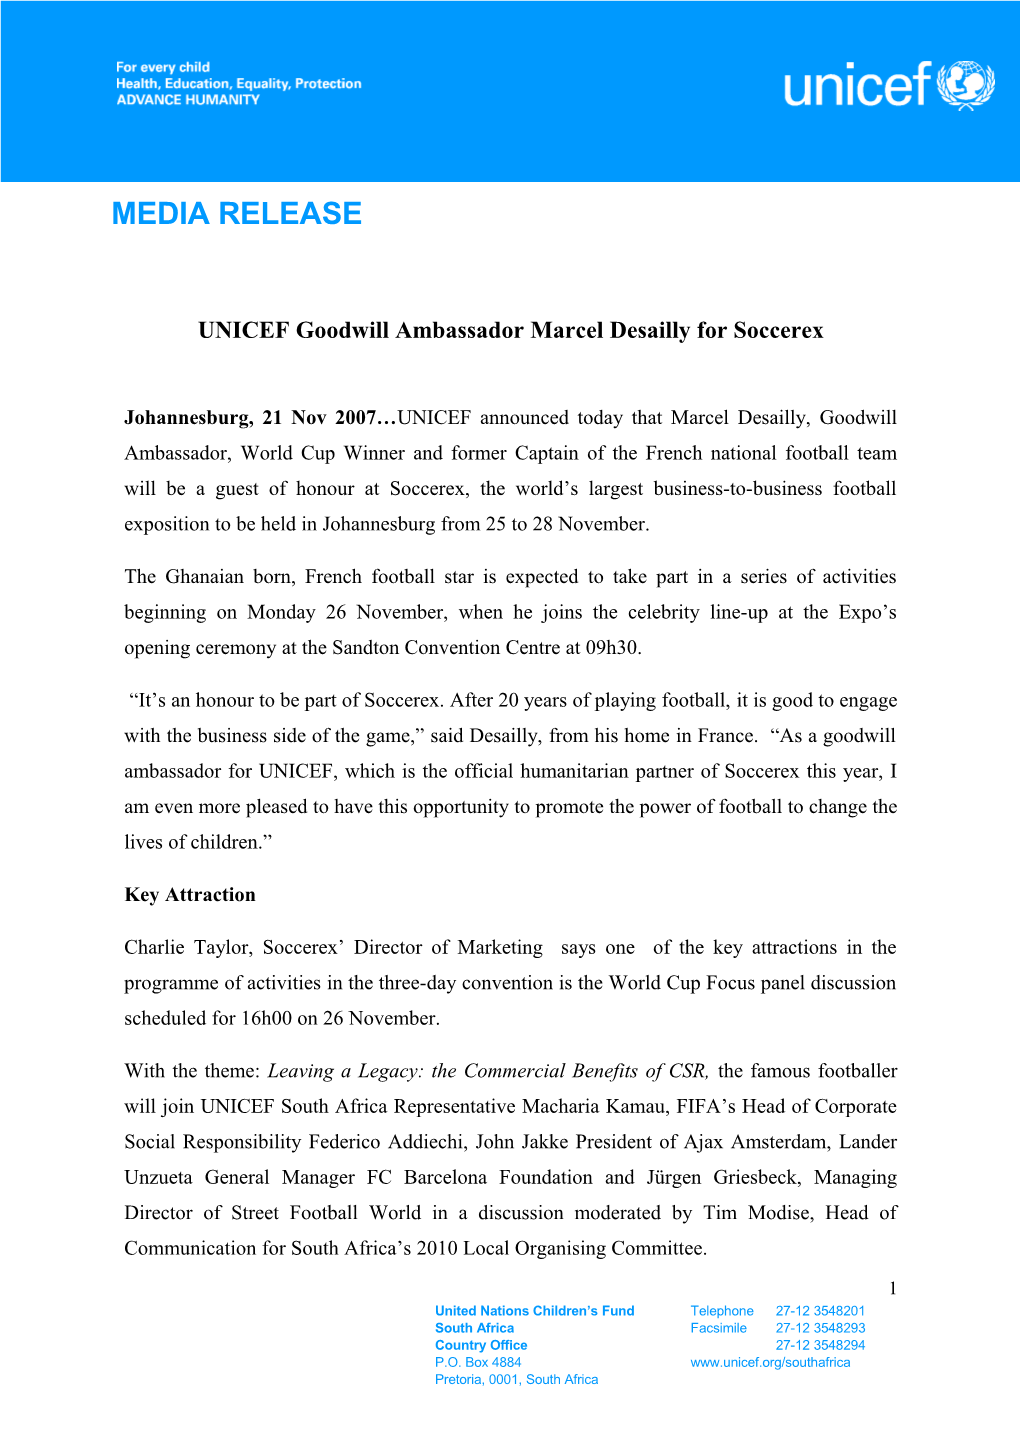 UNICEF Goodwill Ambassador Marcel Desailly for Soccerex